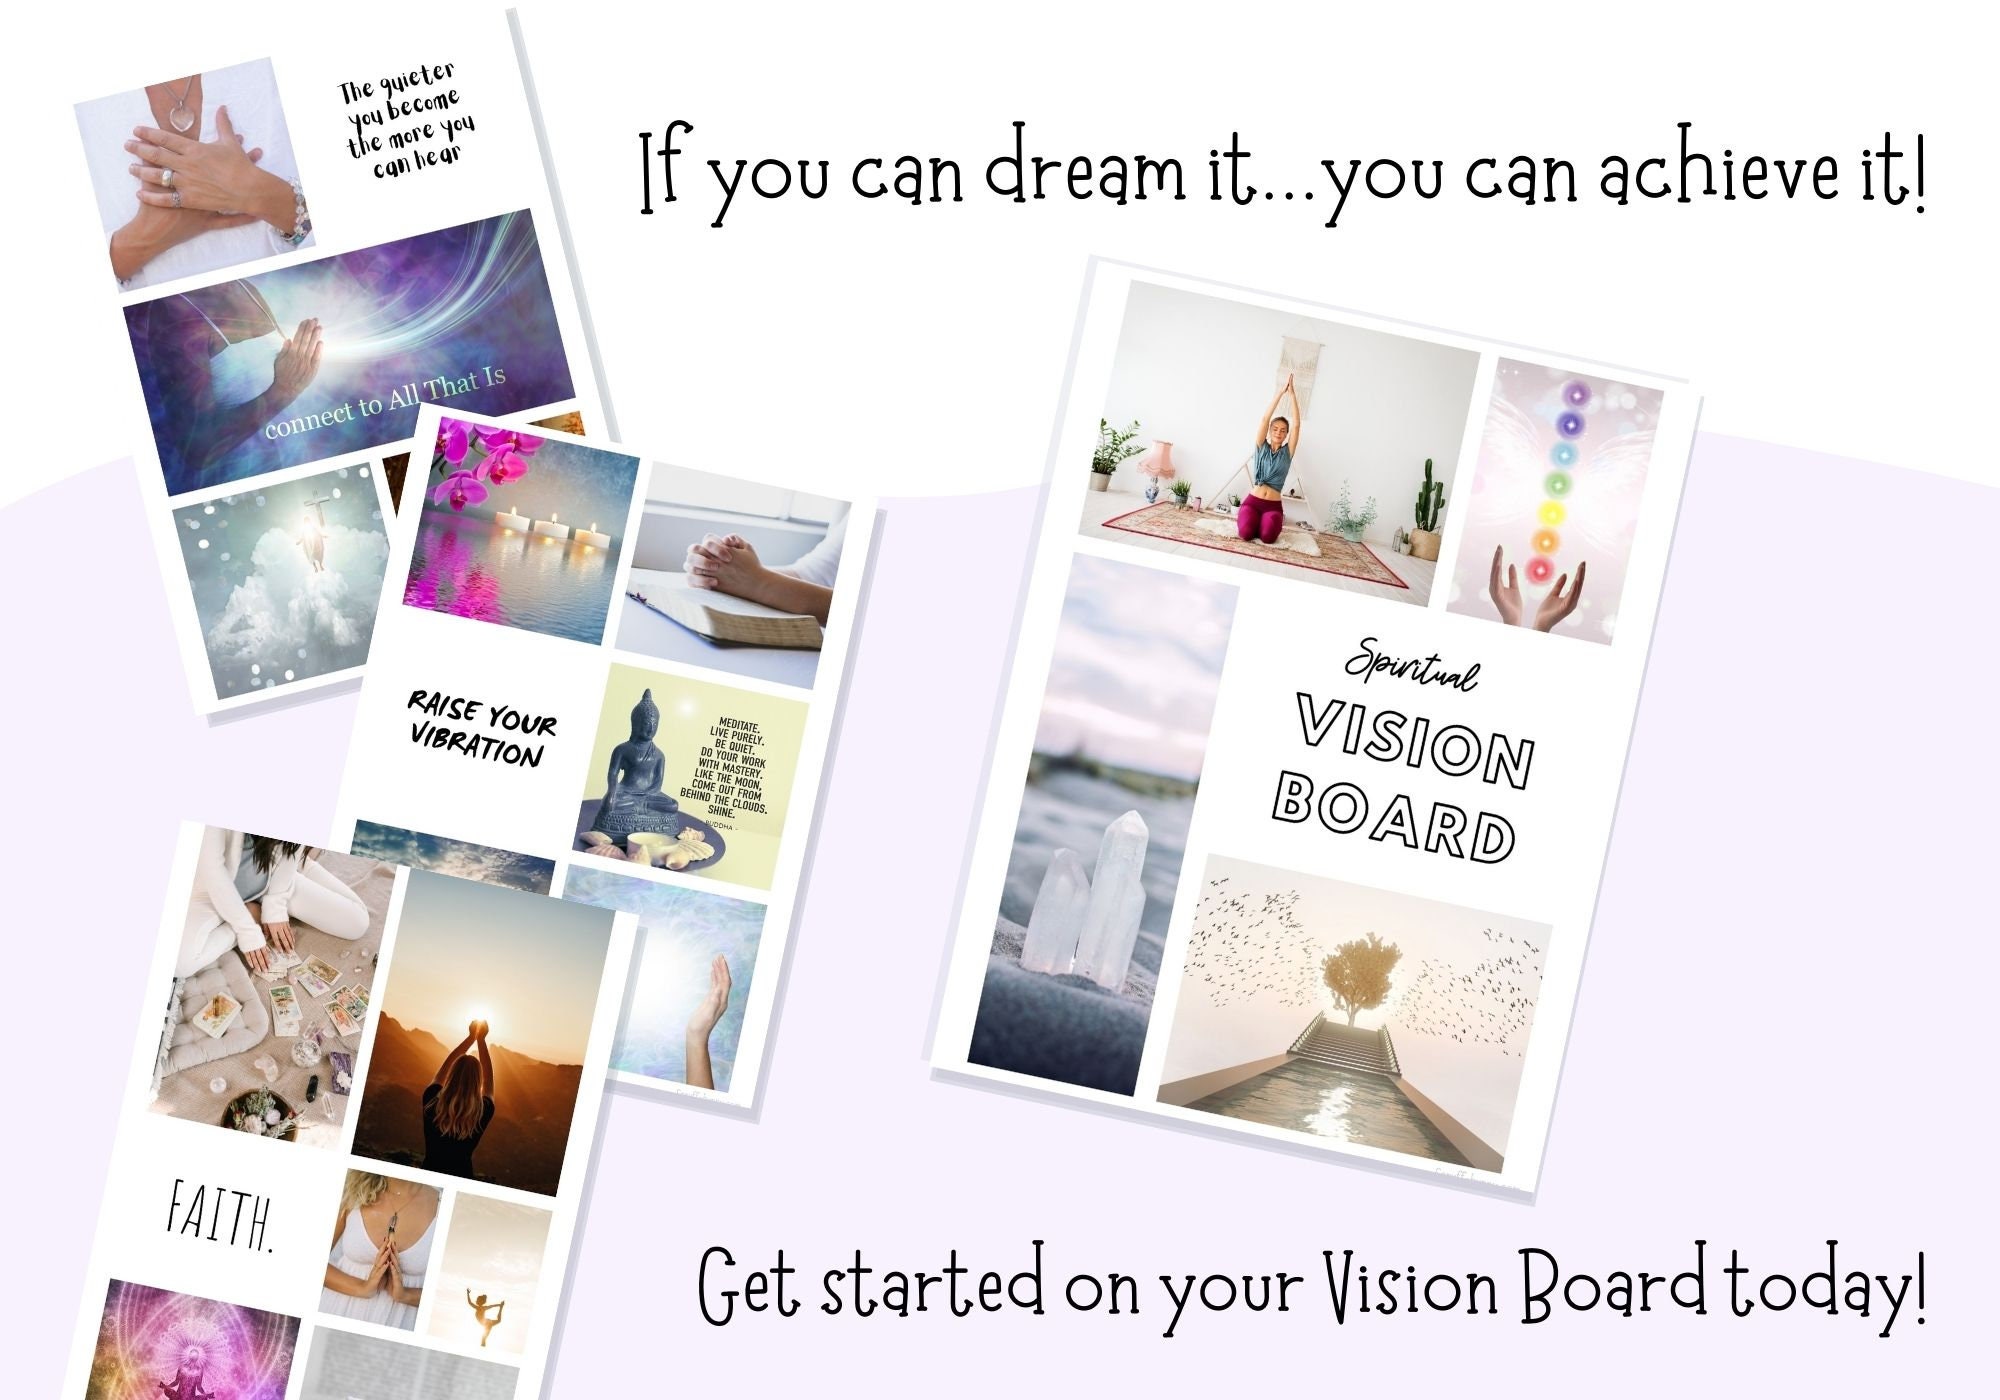 Women's Vision Board Bundle, Vision Board Kit for Women, Vision